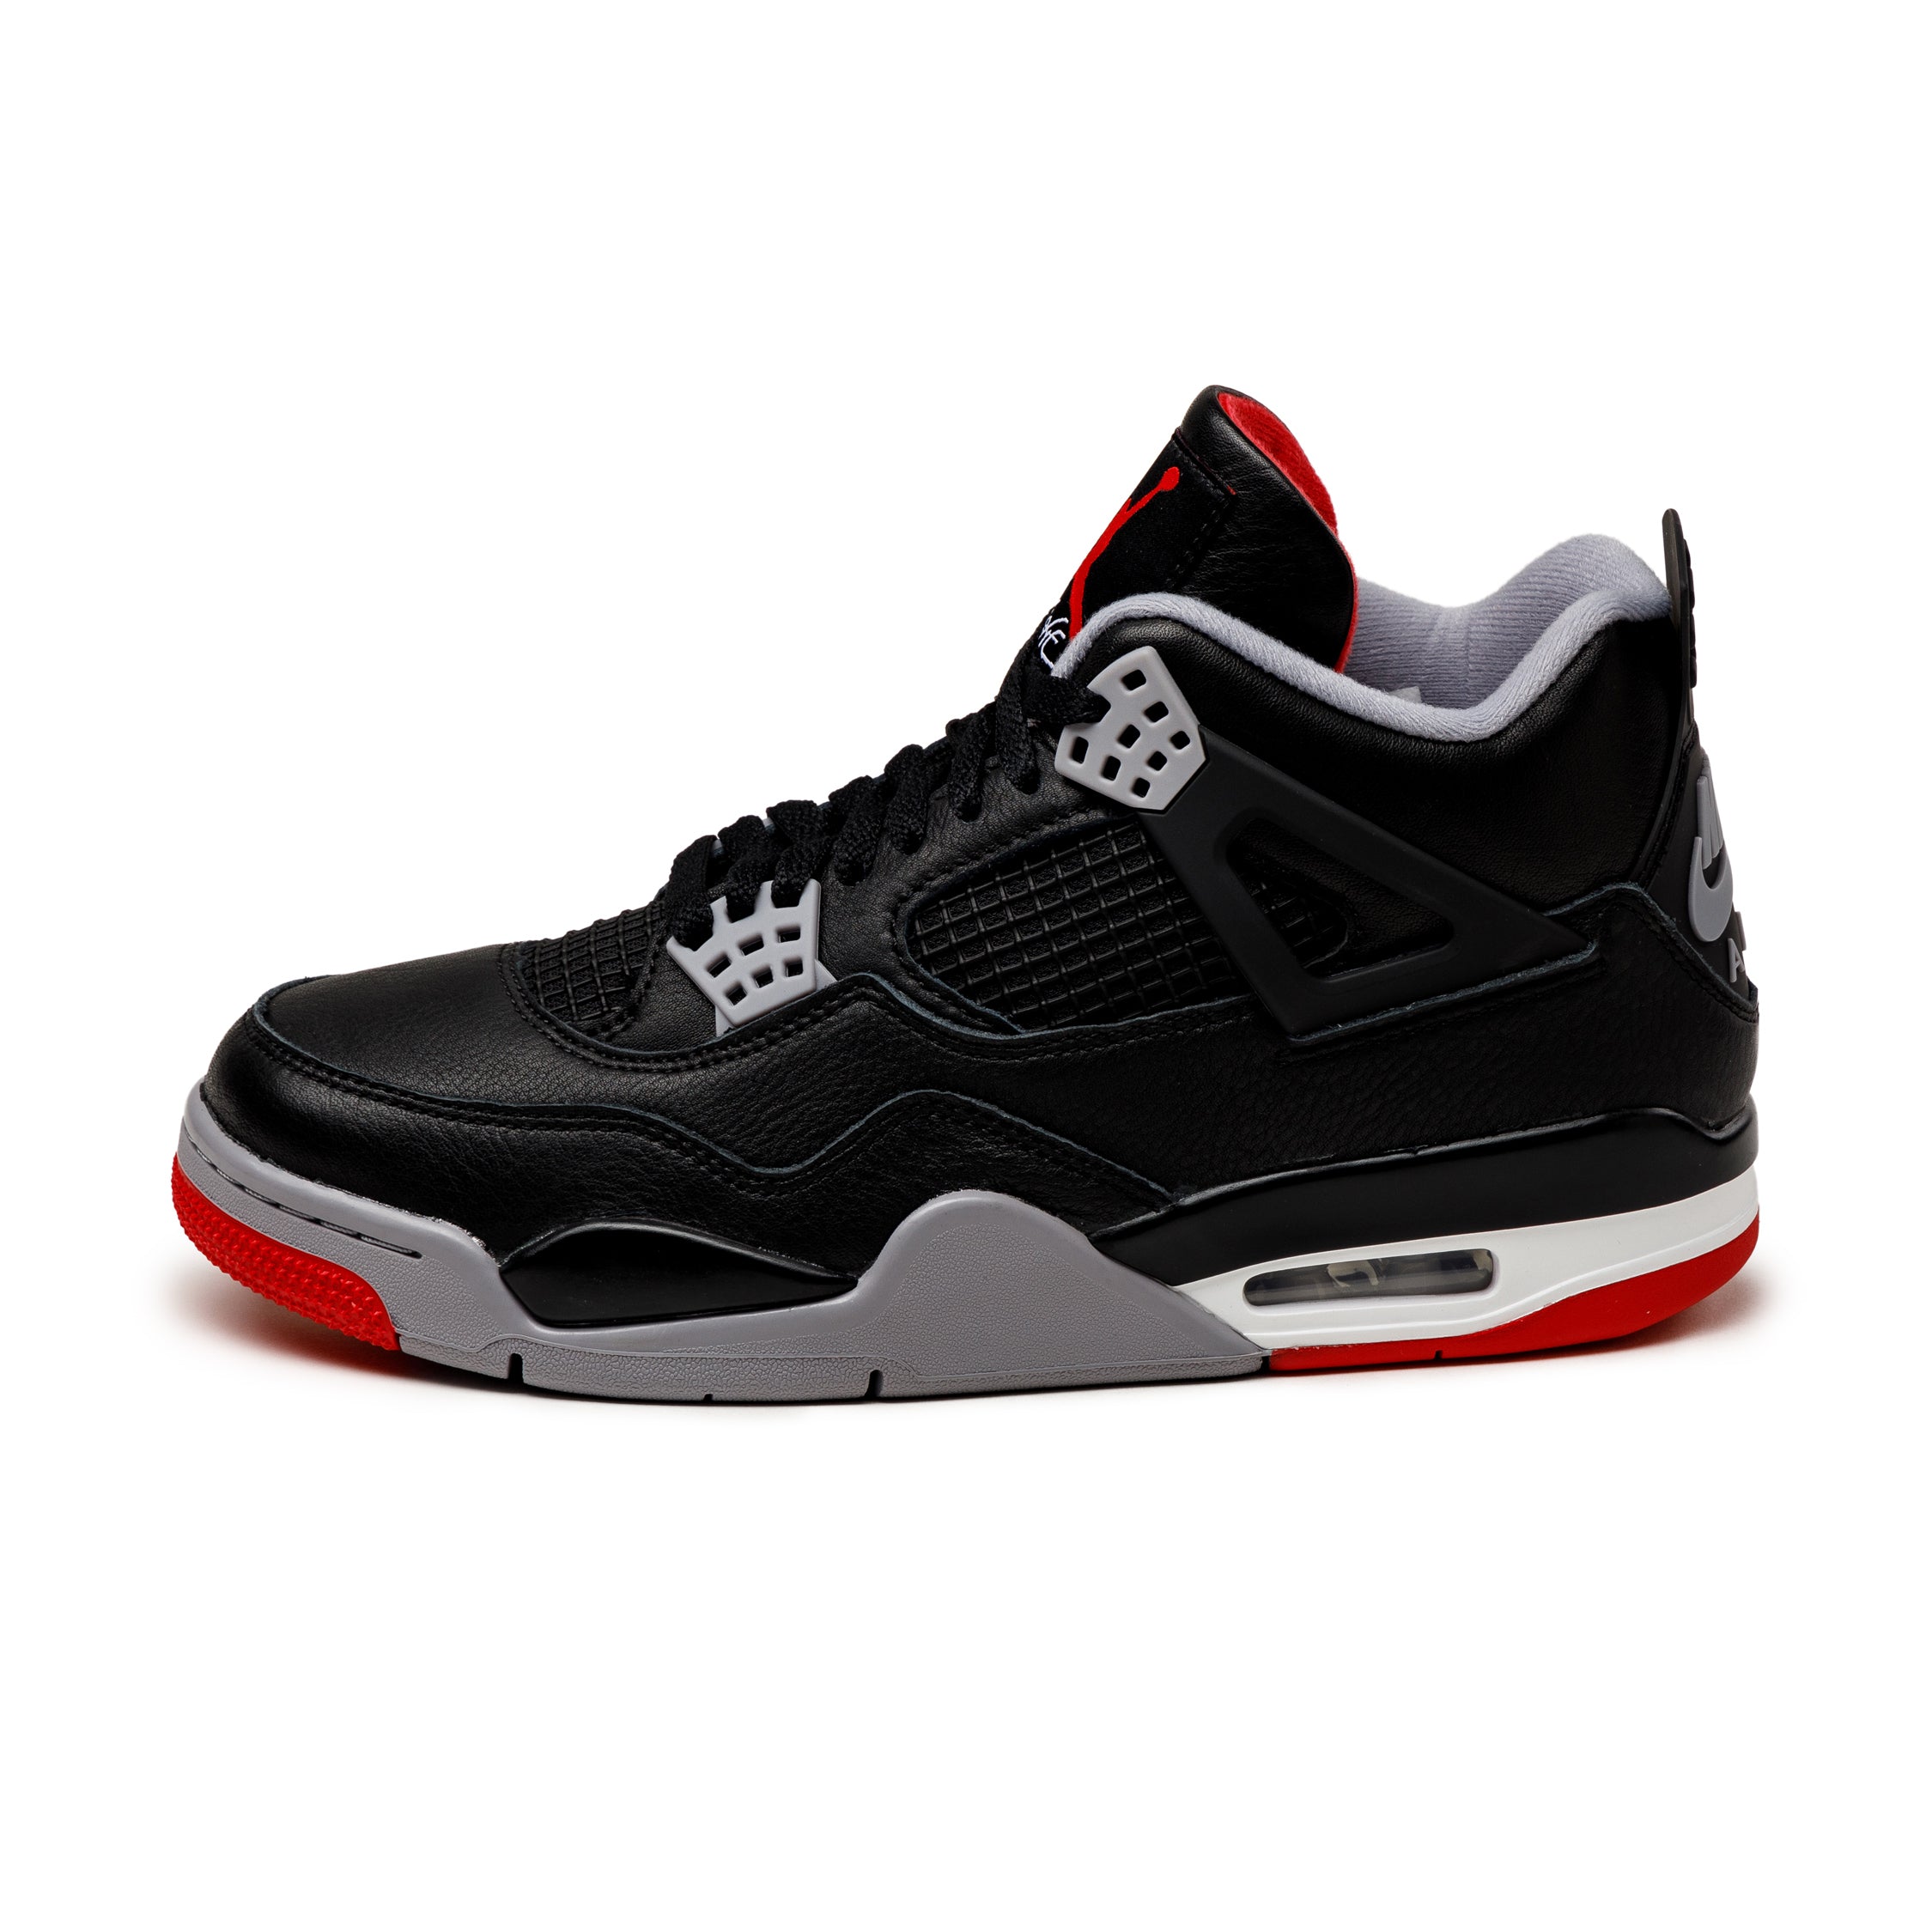 Nike Air Jordan 4 Retro *Bred Reimagined* » Buy online now!